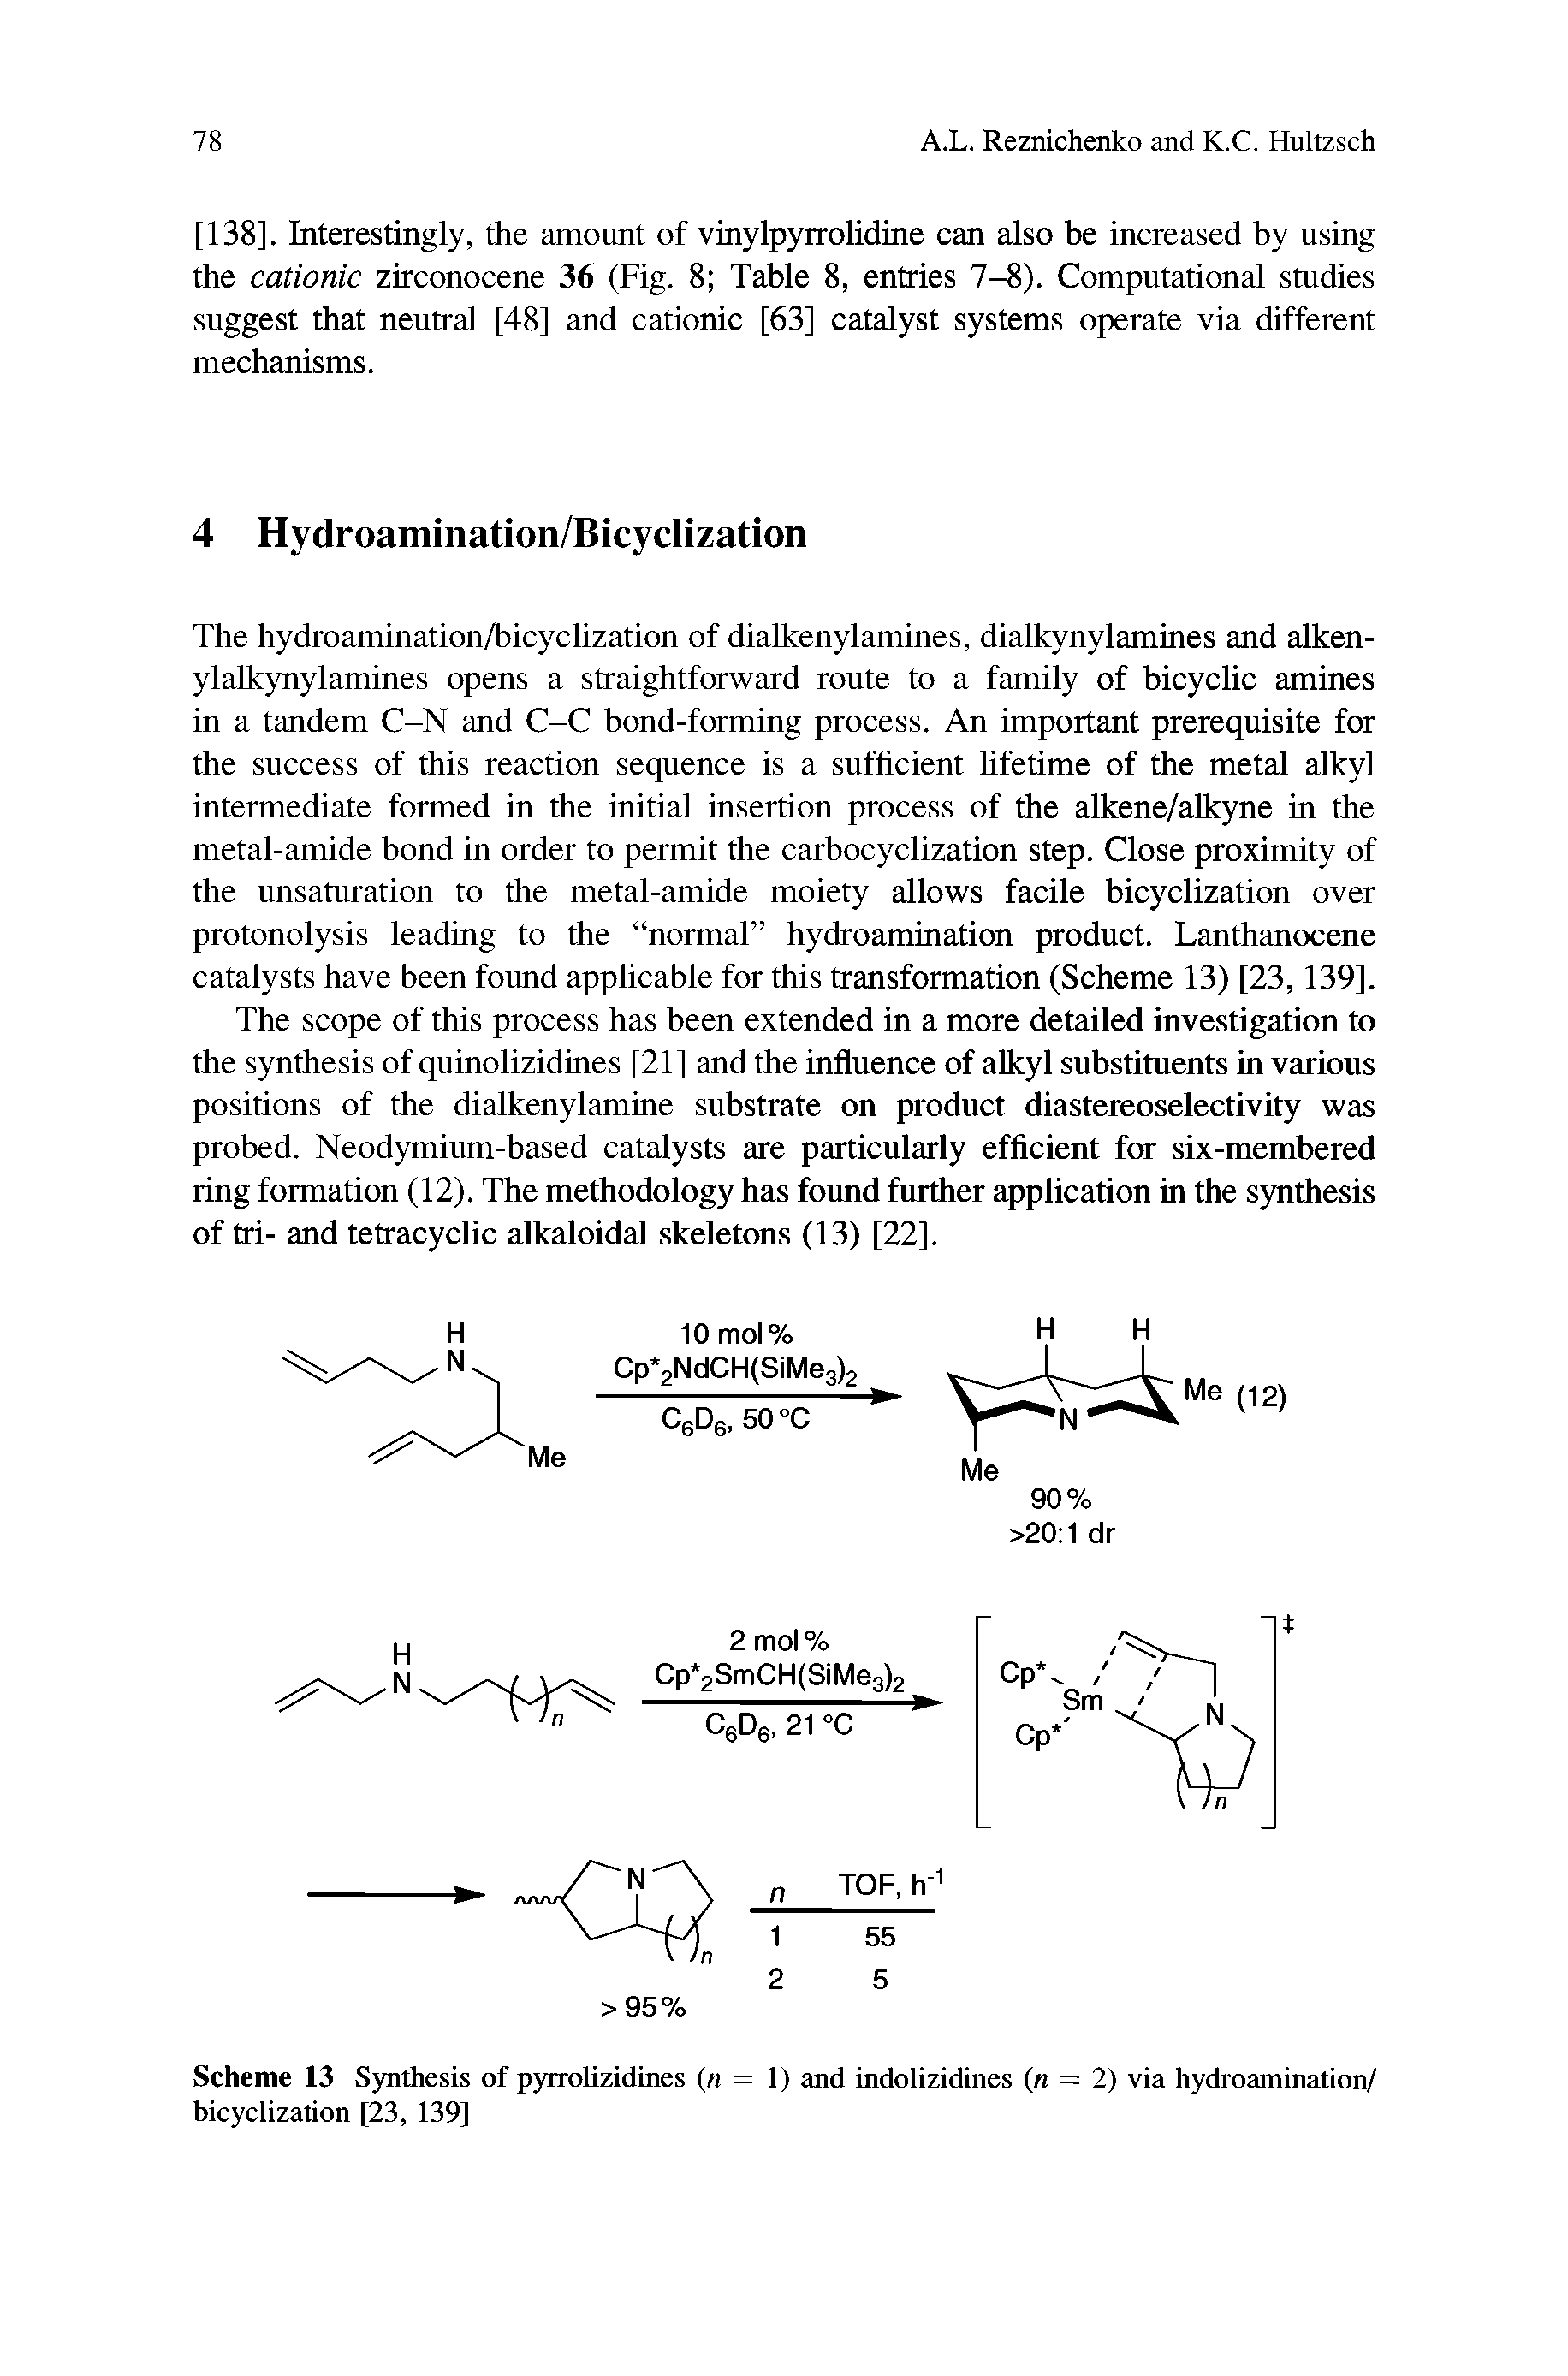 Scheme 13 Synthesis of pyrrolizidines (n = 1) and indolizidines (n = 2) via hydroamination/ bicyclization [23, 139]...